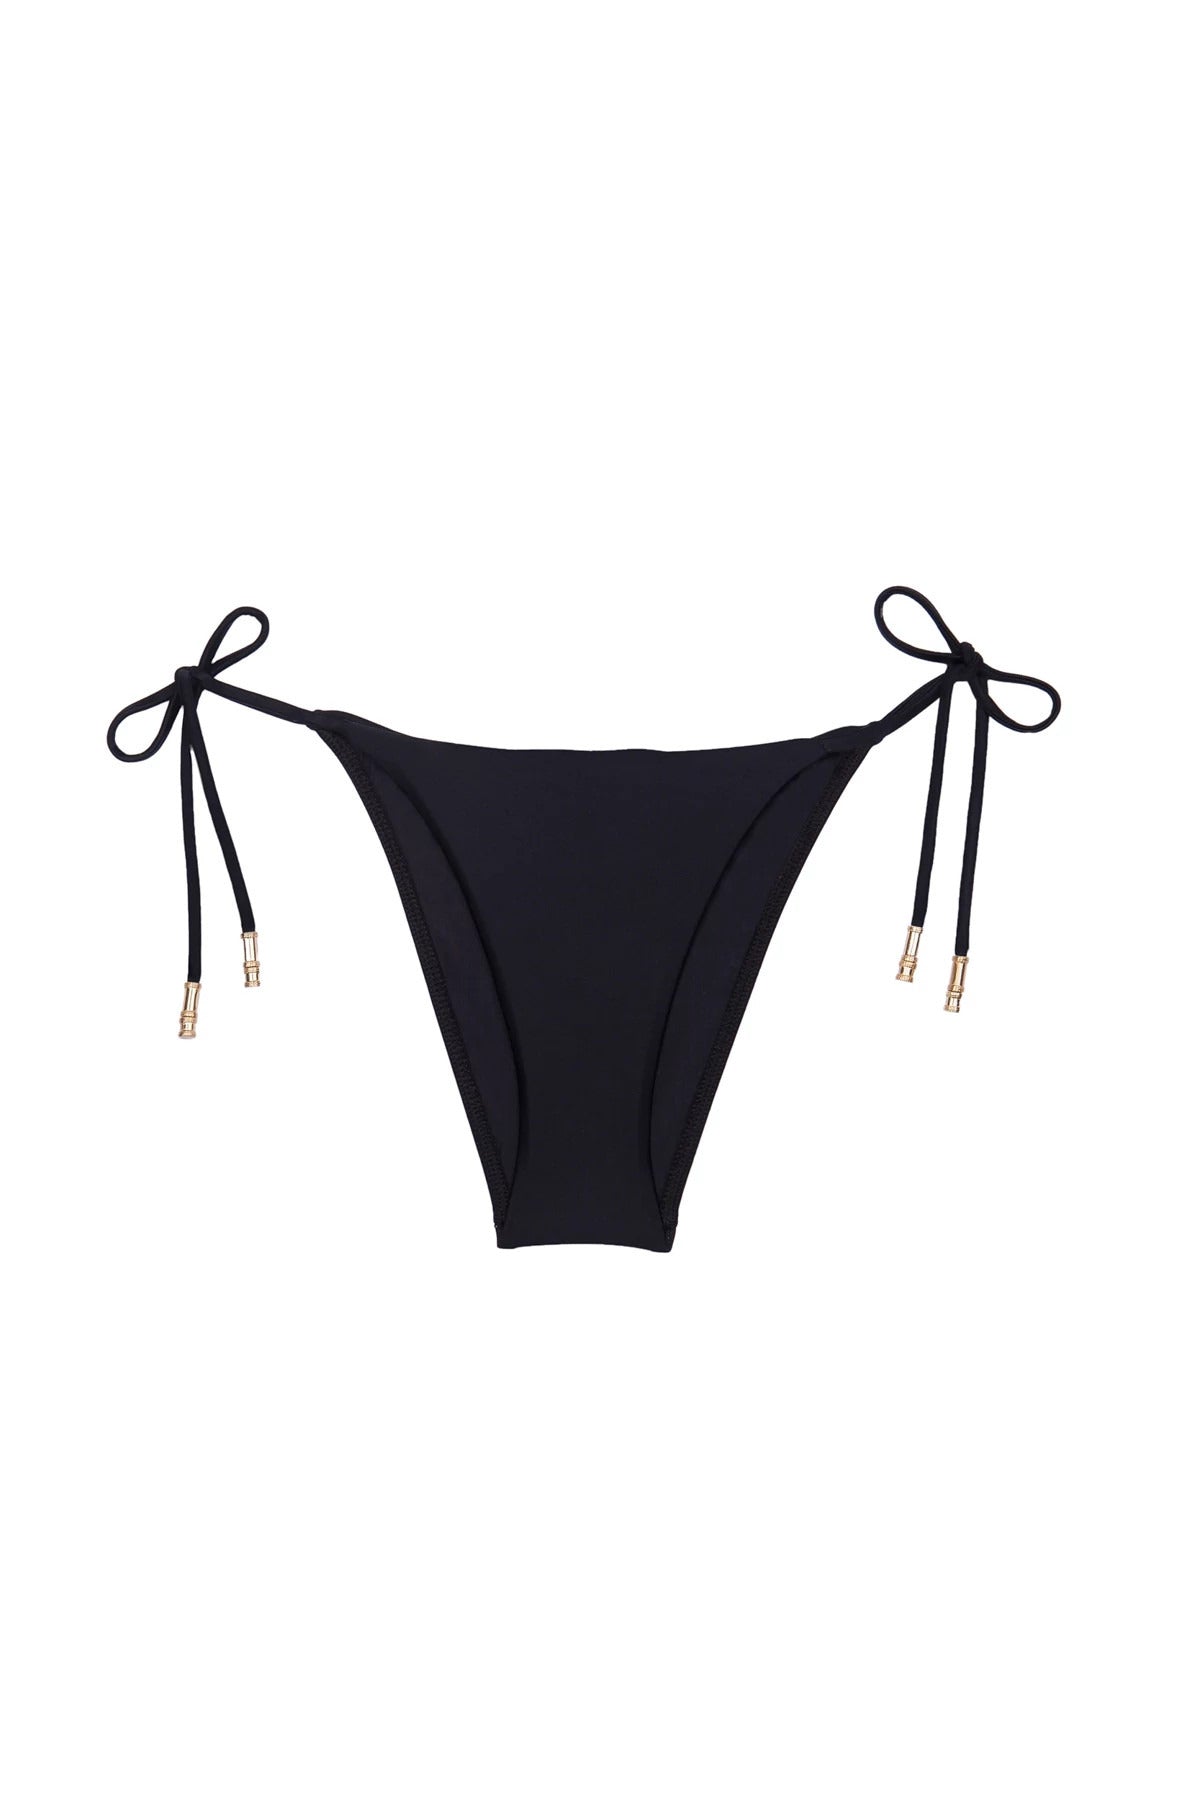 Vix Swimwear Women's Lucy Tie Side Brazilian Bikini Bottom